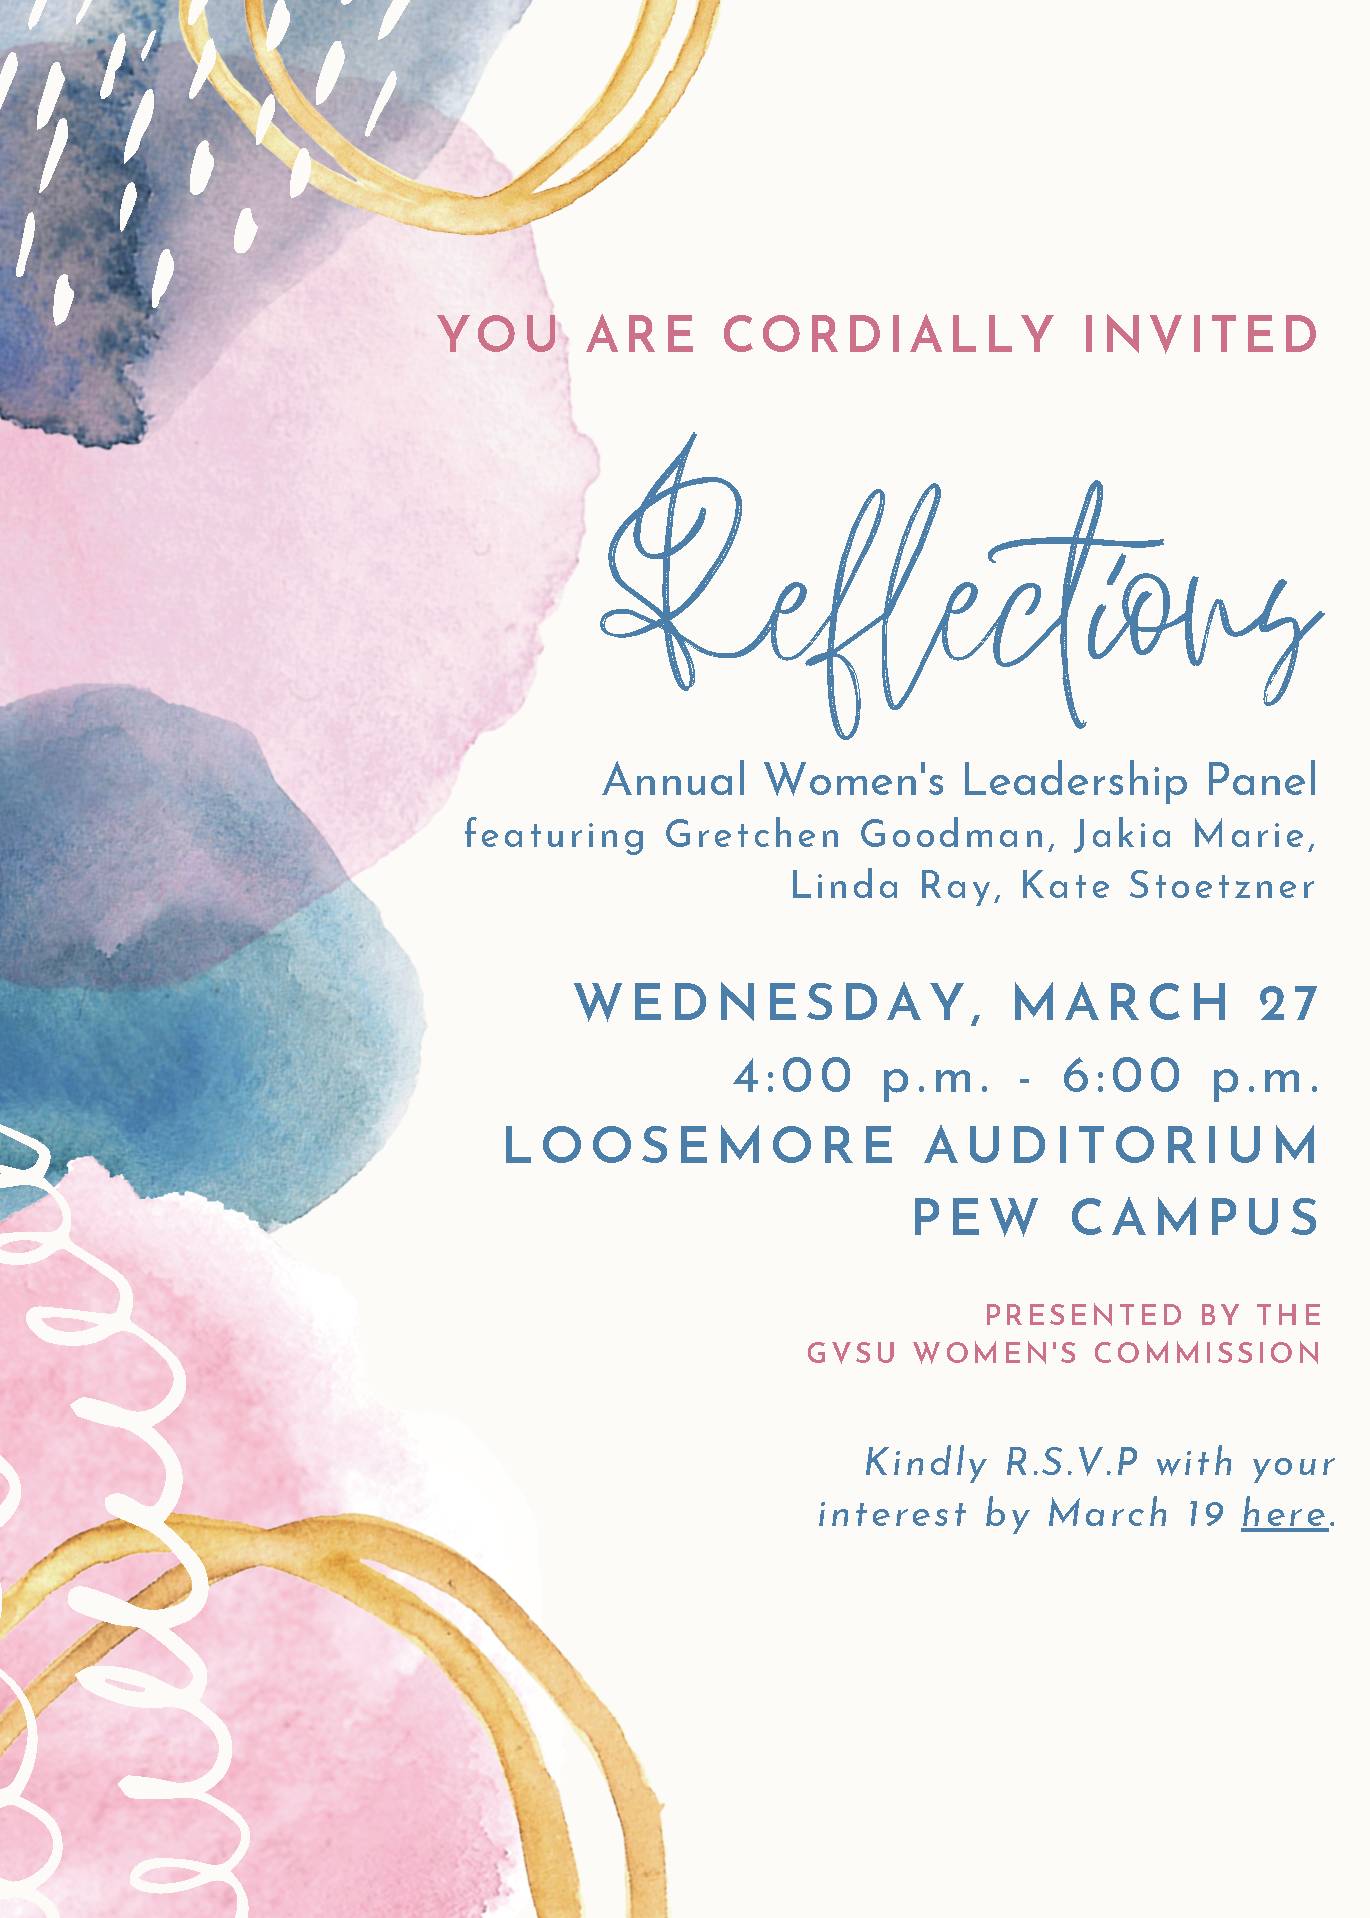 Reflections Annual Women's Leadership Panel Invitation March 27 4p - 6p